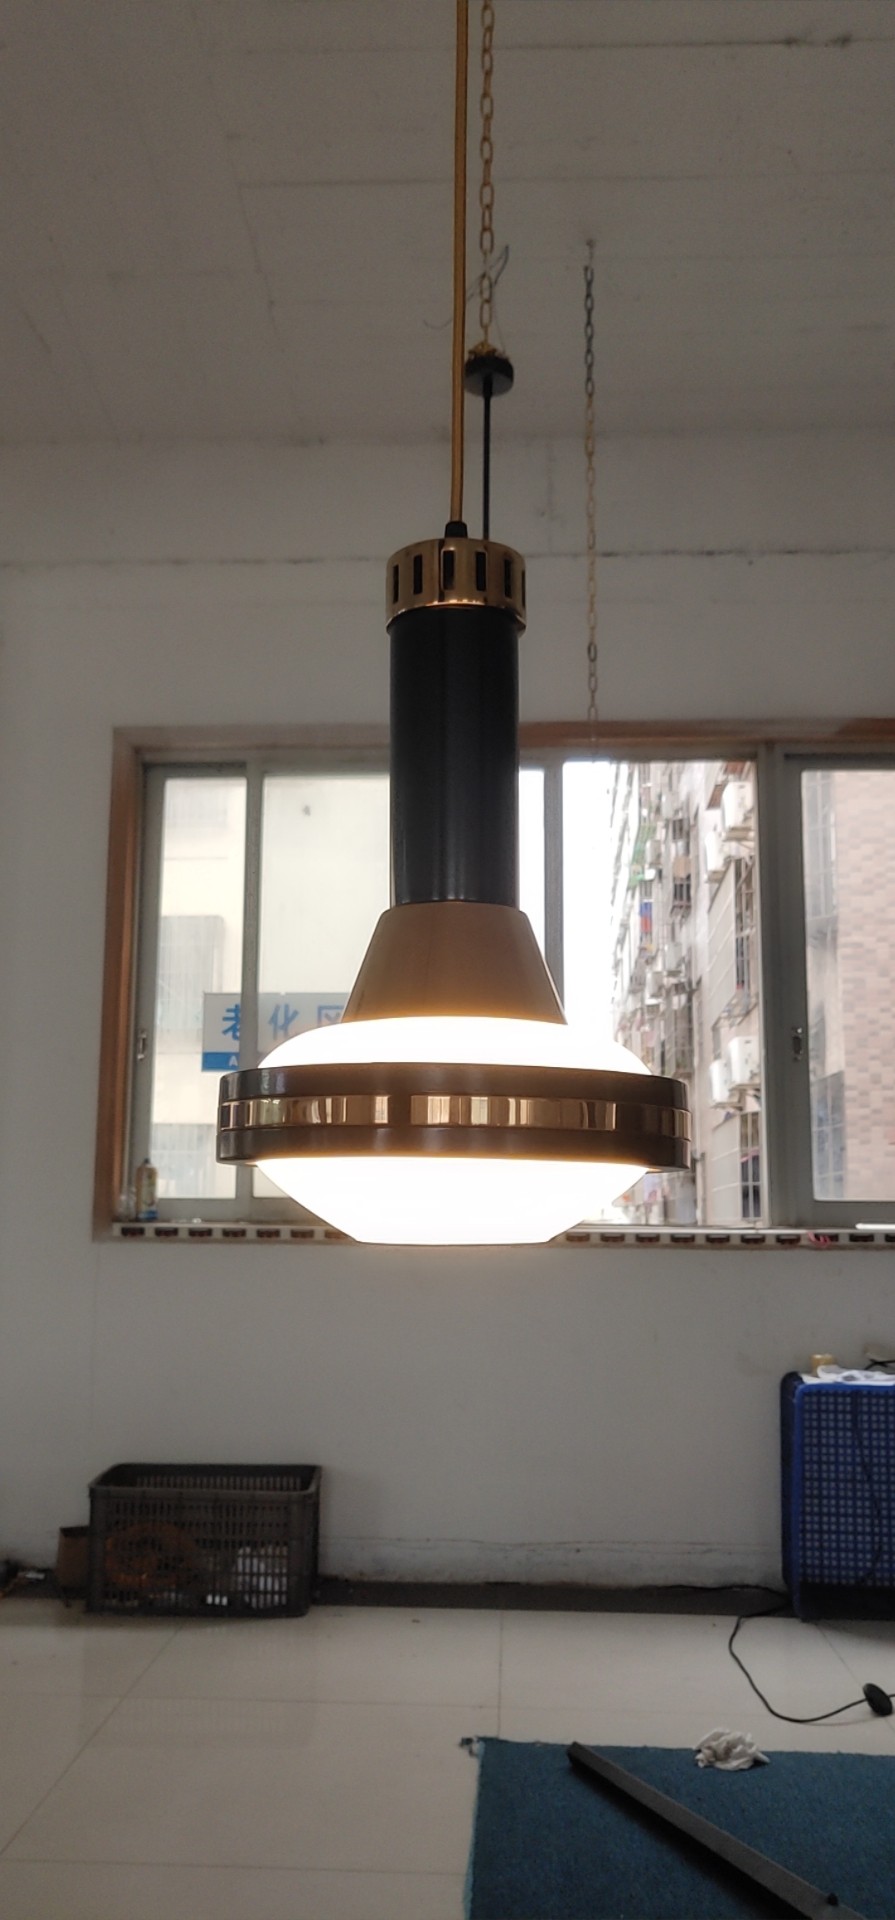 Modern Decorative Dinging Room Pendant Lamp (LTG-02)